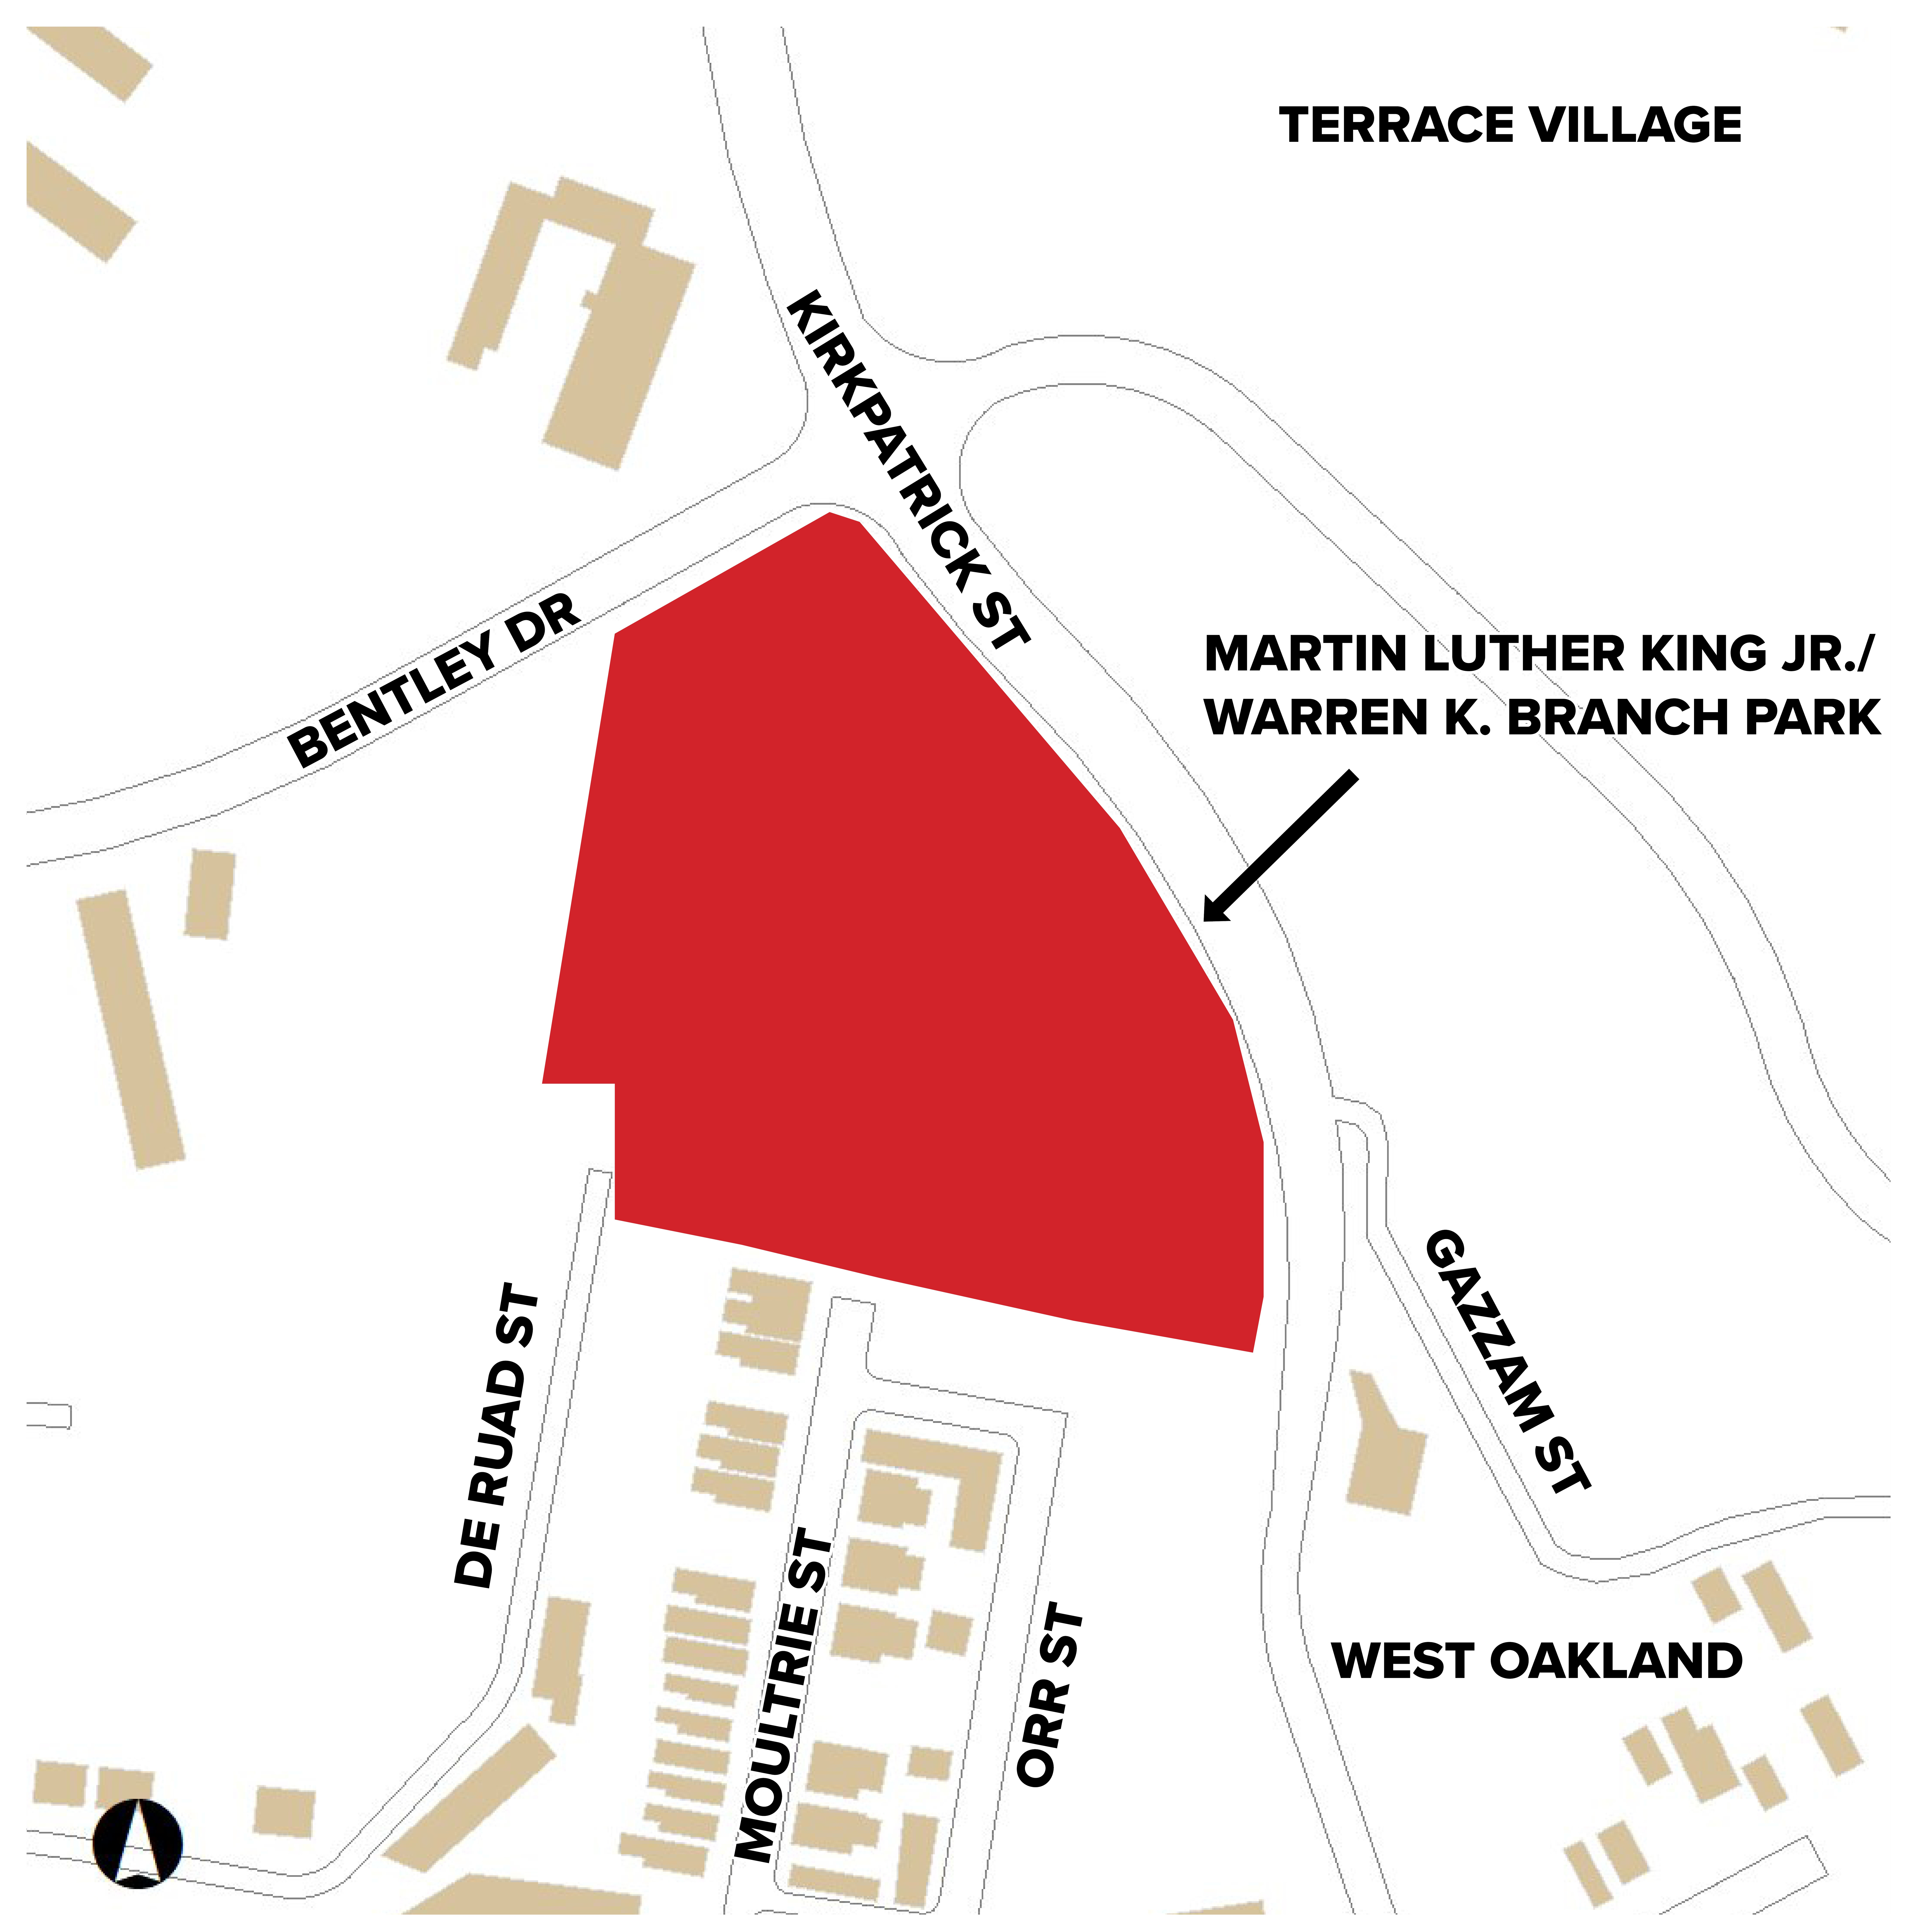 Map showing location of Martin Luther King Jr./Warren K. Branch Park in the Terrace Village neighborhood